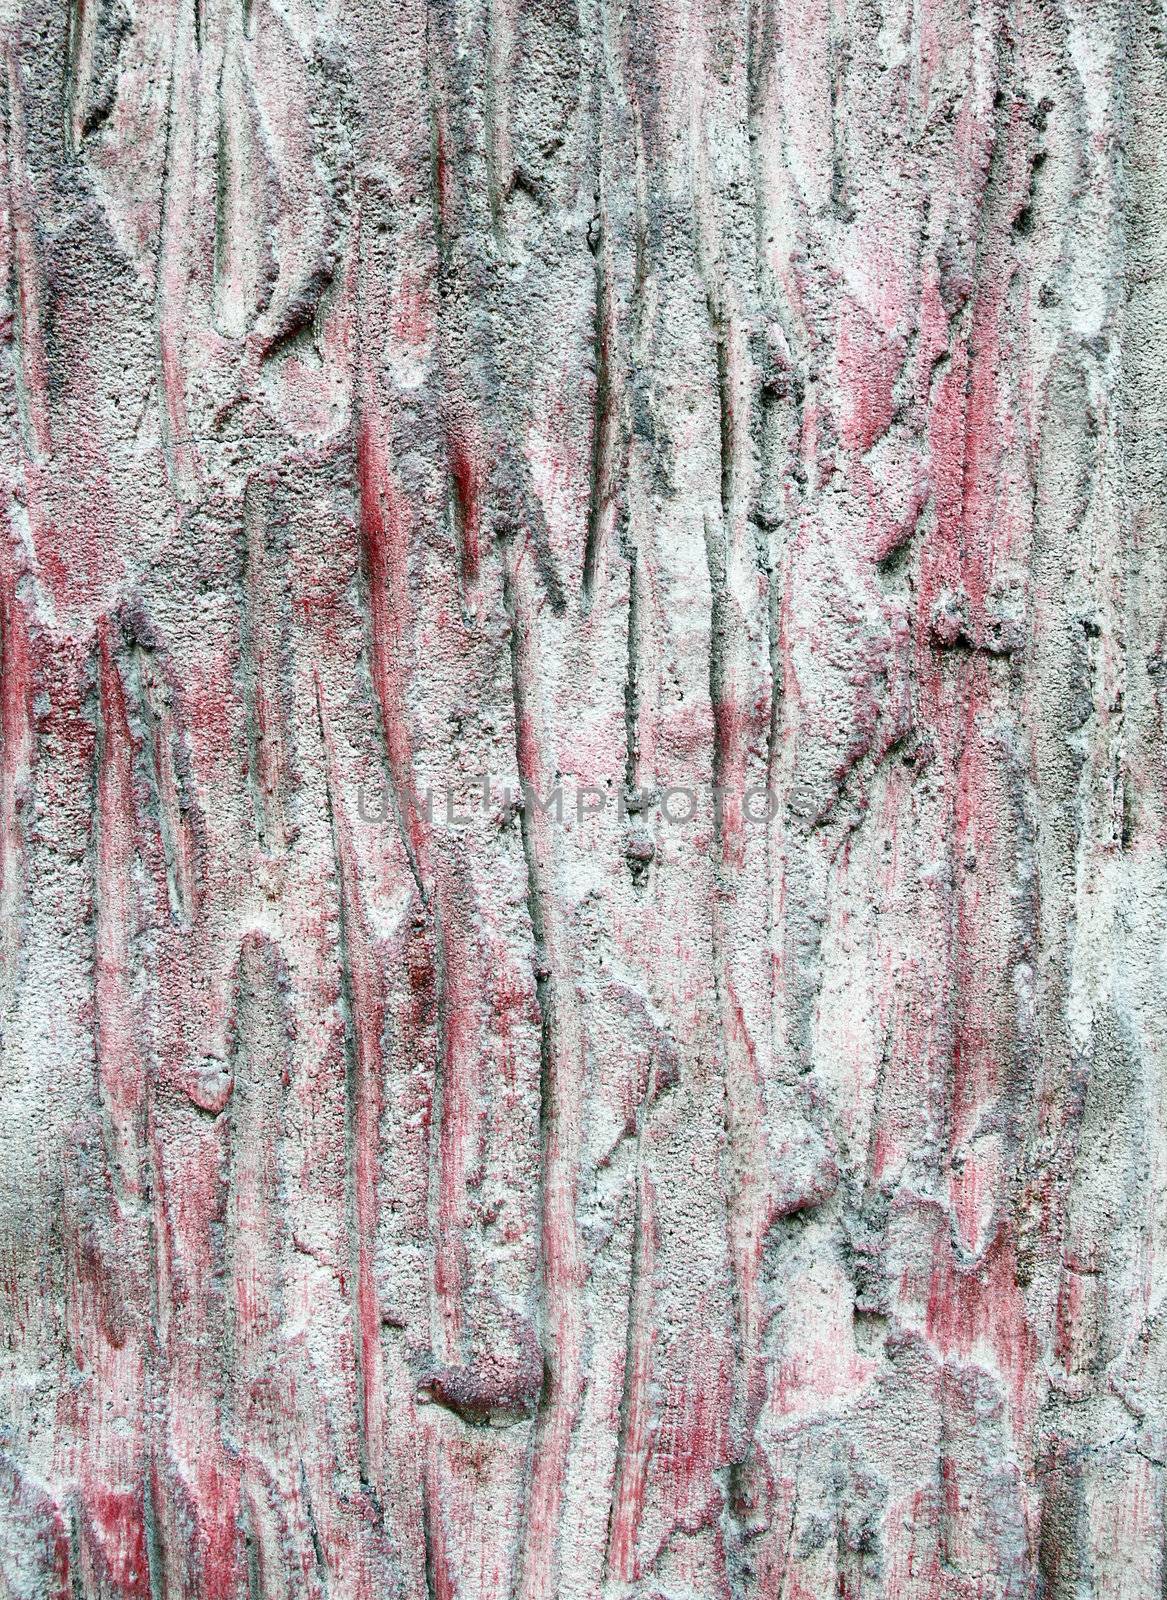 Texture of tree bark background closeup by geargodz